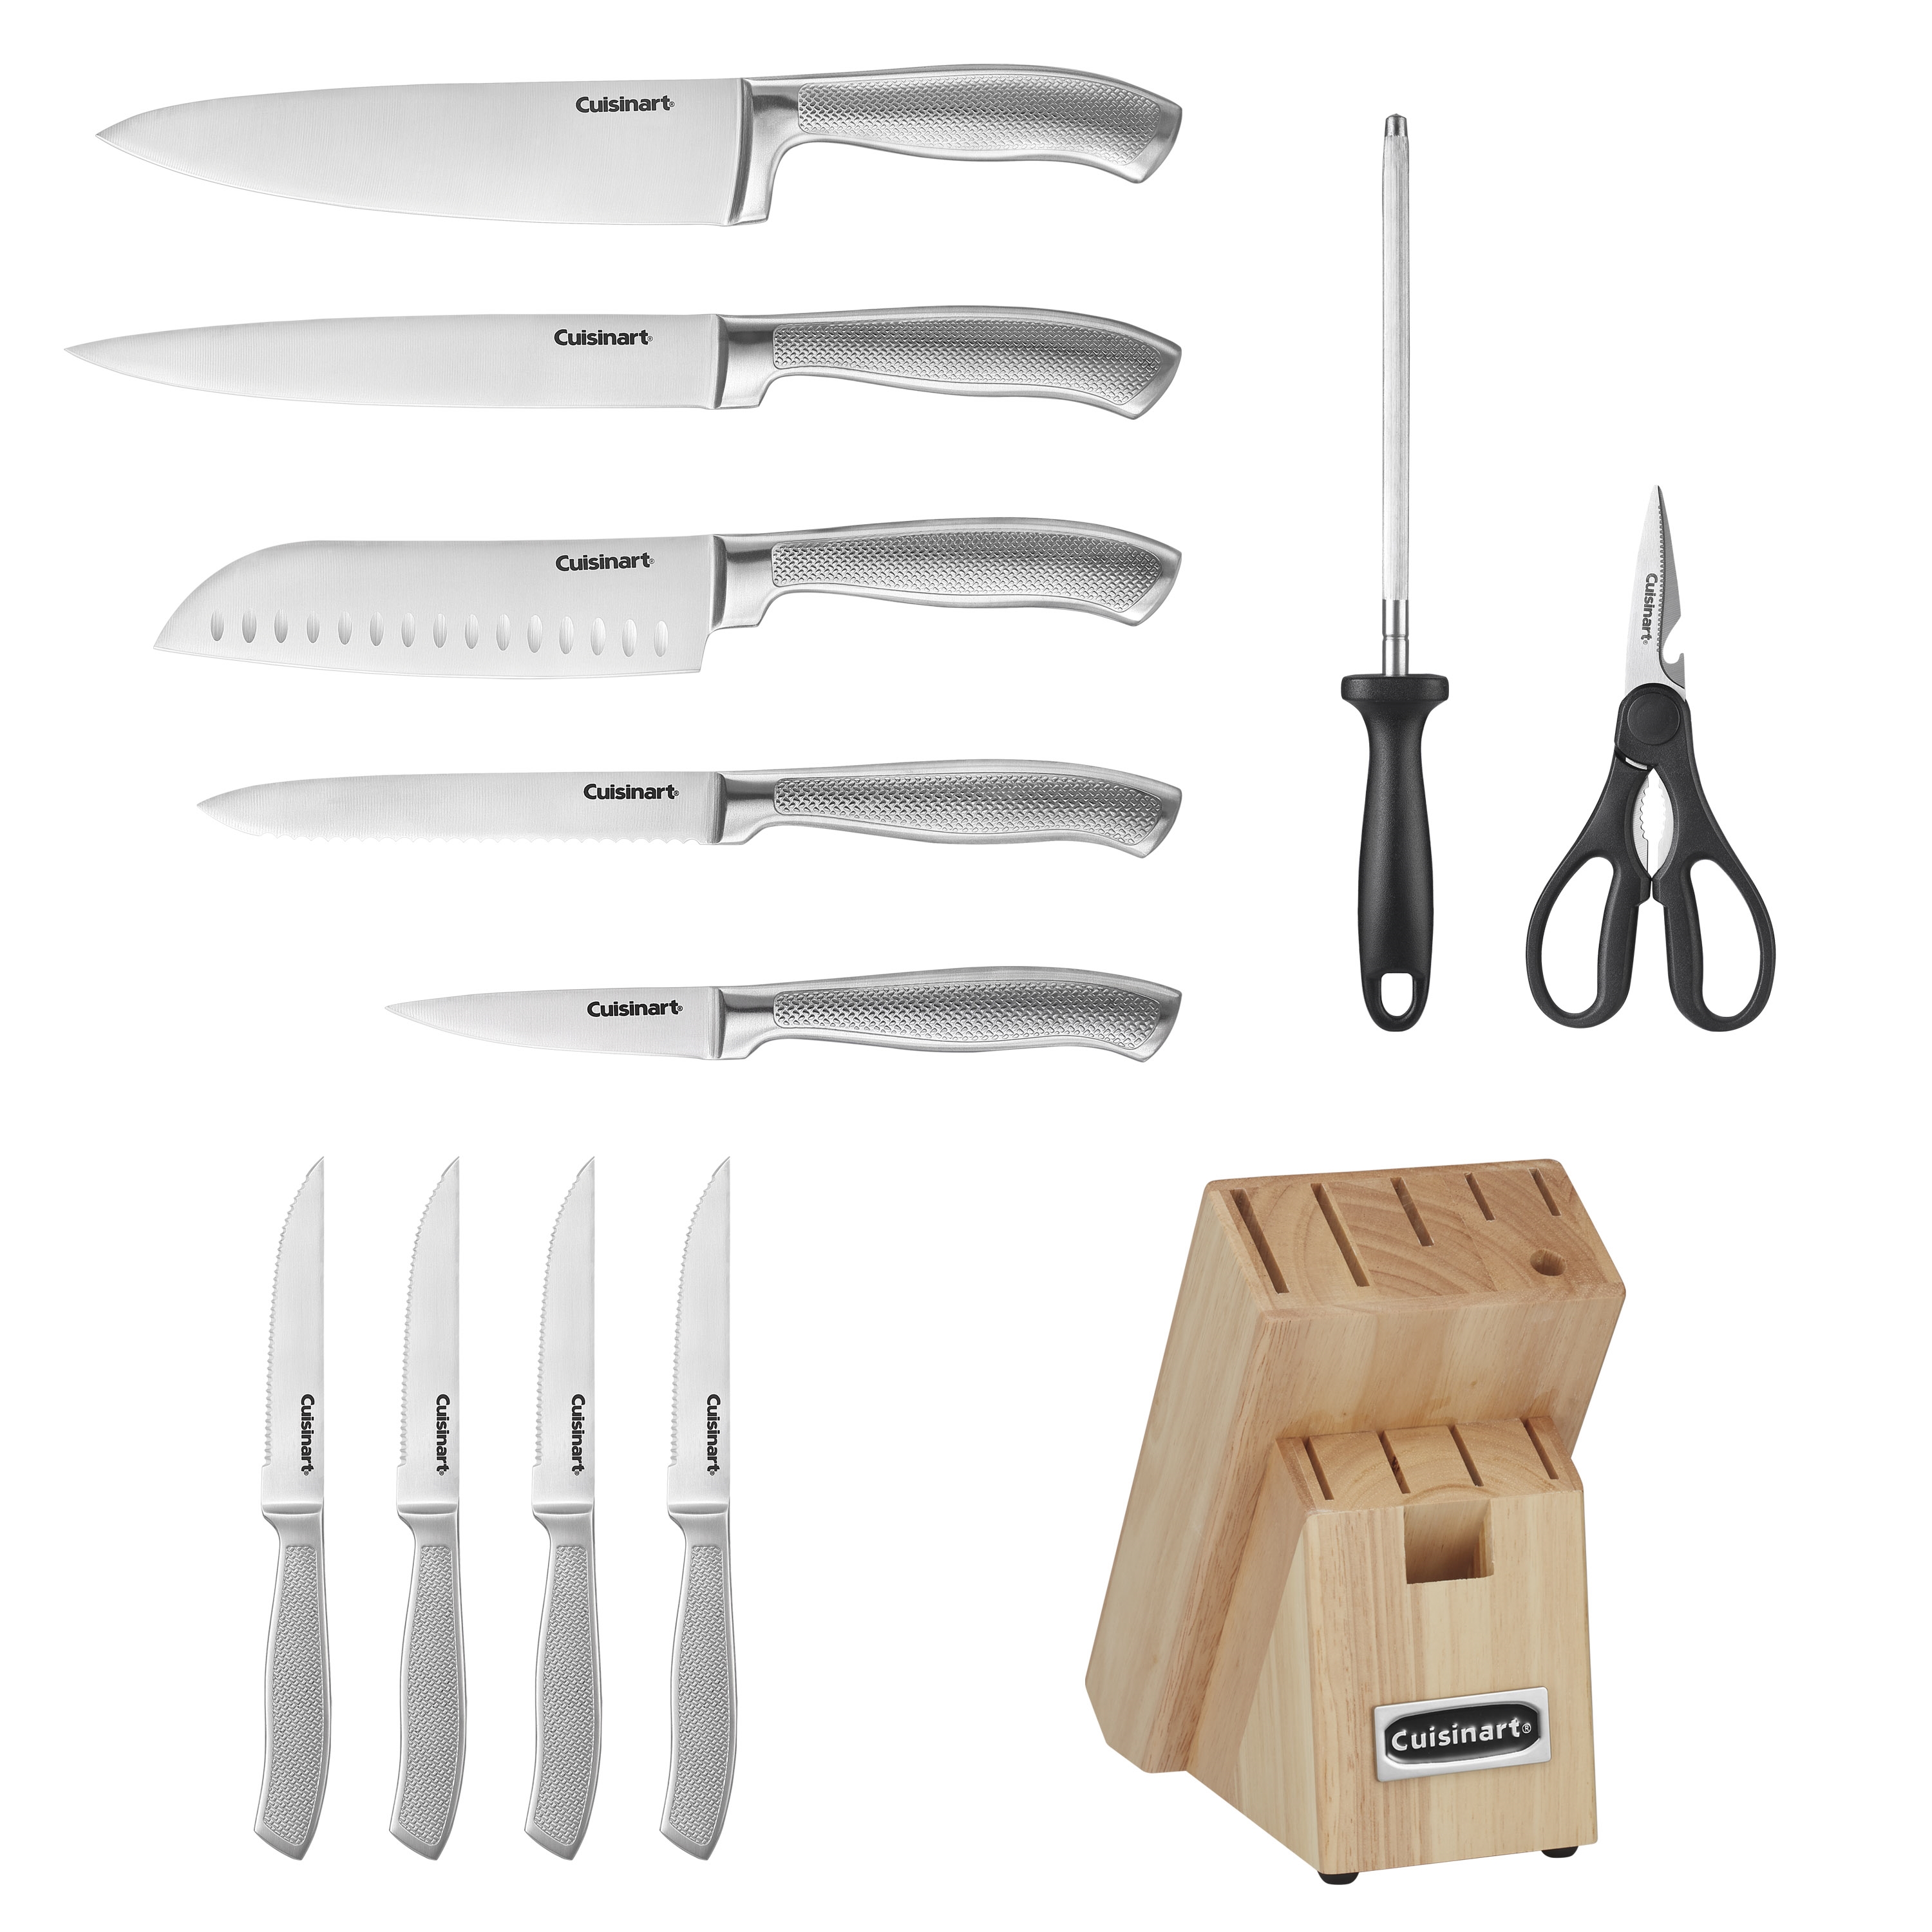 Cuisinart Classic Stainless Steel Knife Block Set, 17 Piece